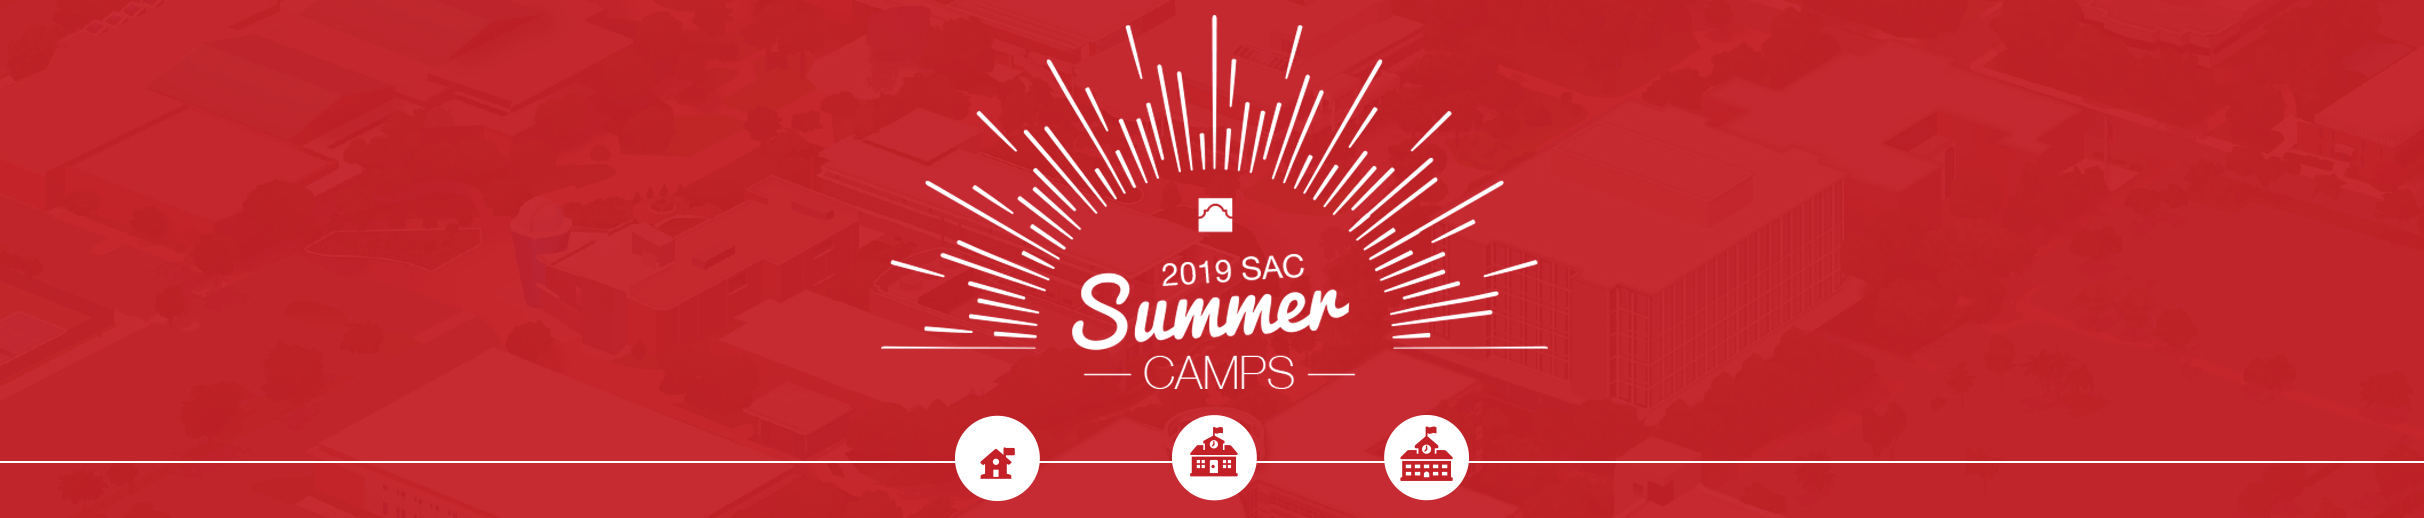 SAC Experience SAC Community SAC Summer Camps Alamo Colleges